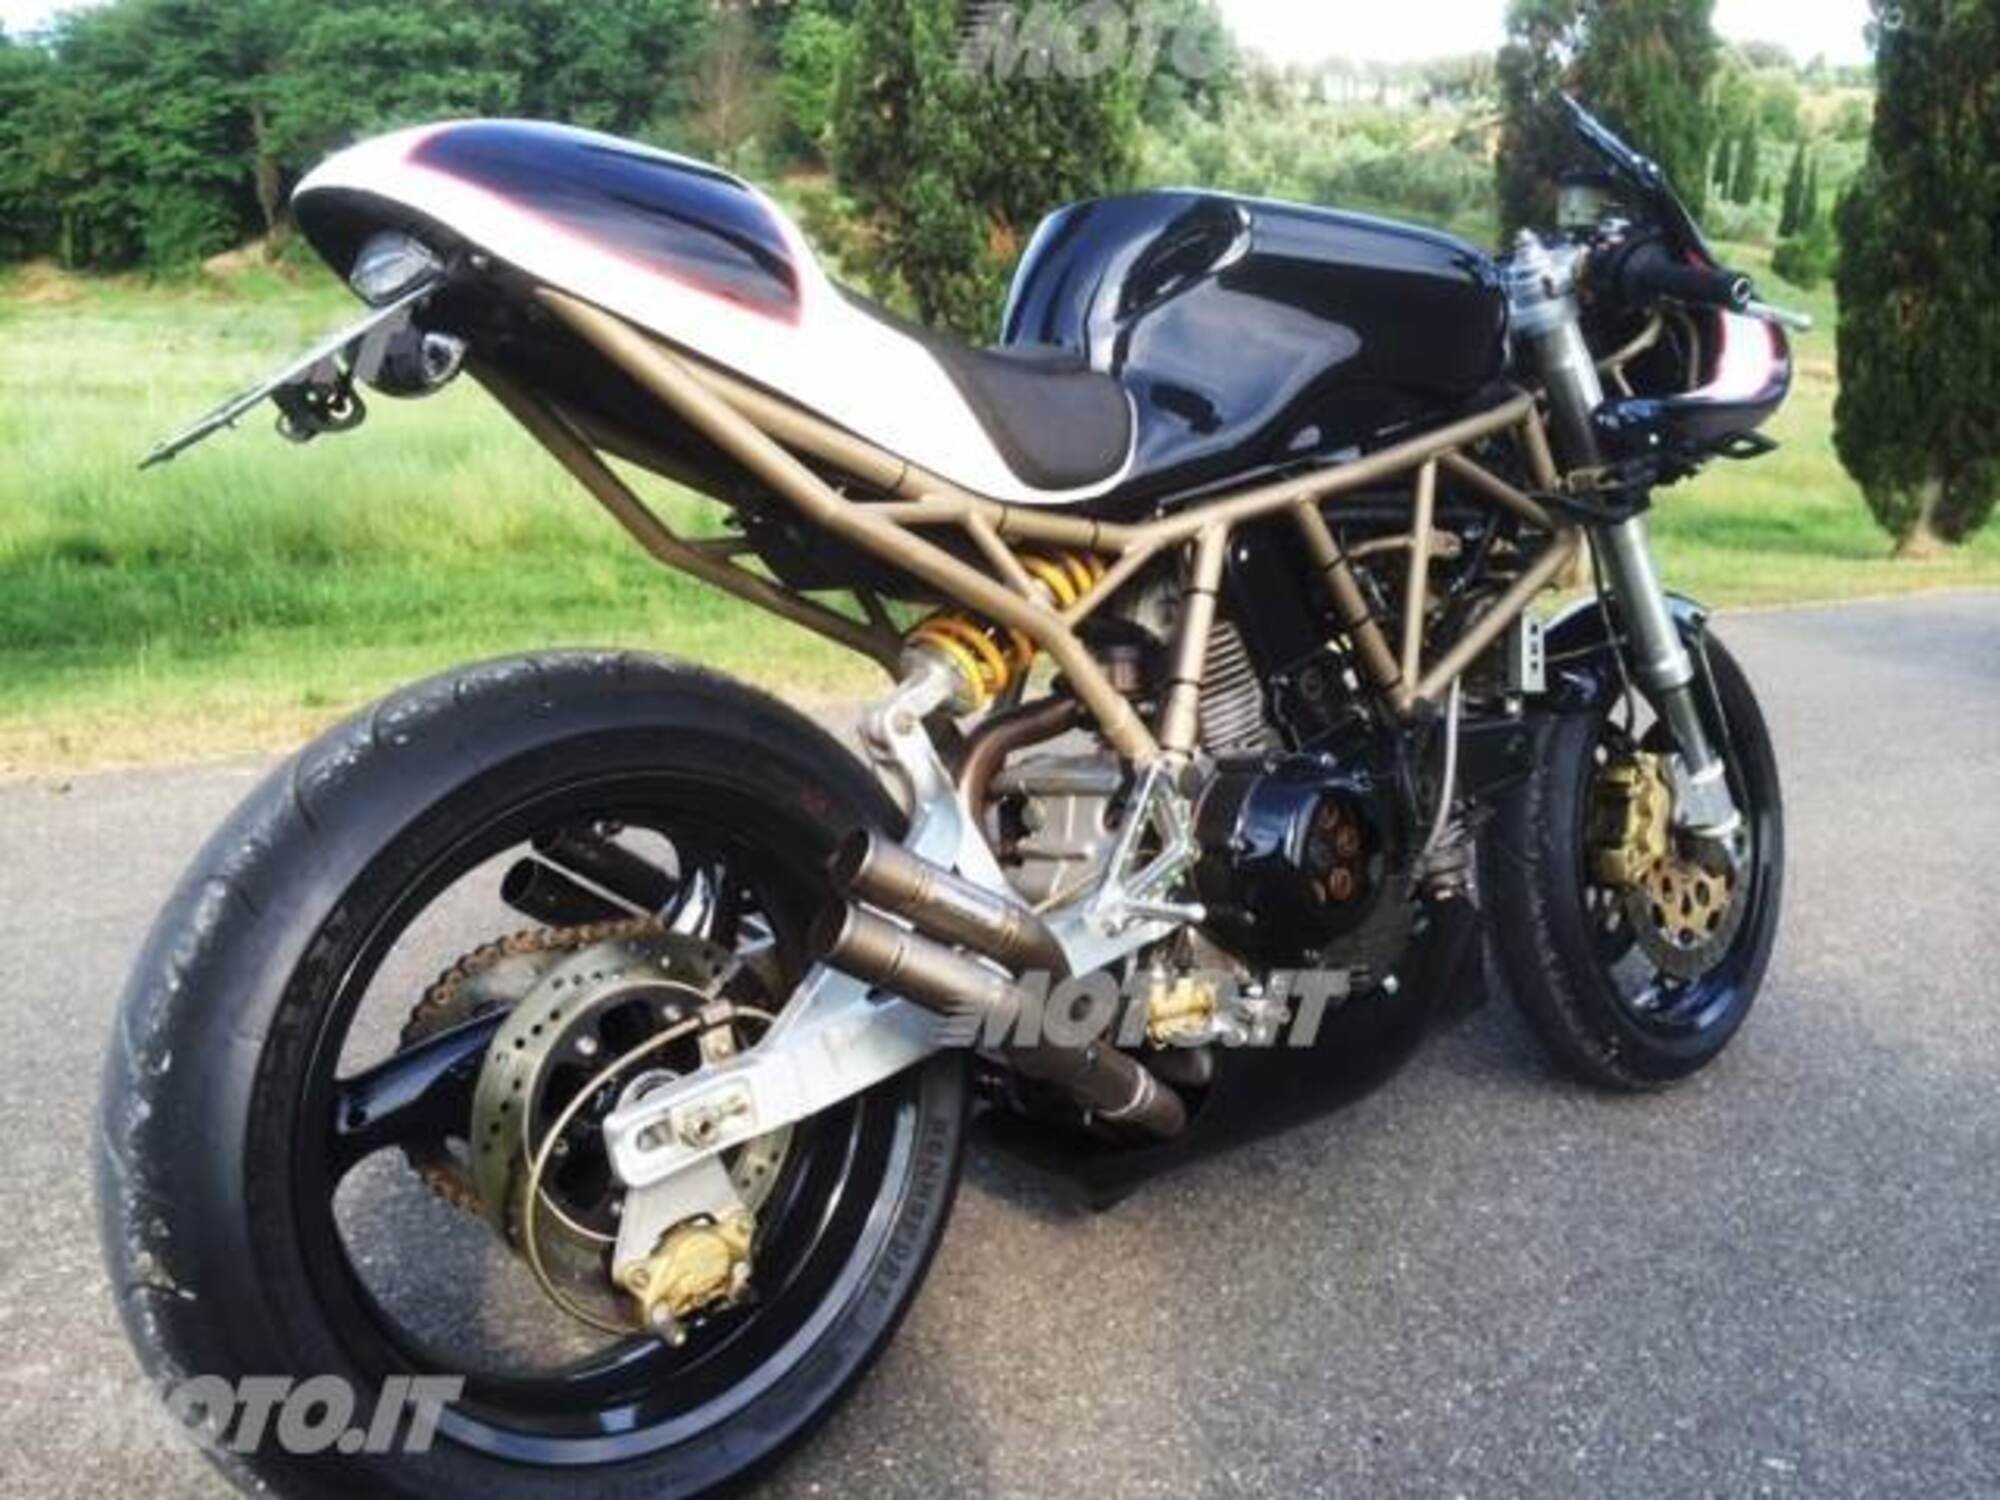 Le Strane di Moto.it: Ducati 900 SuperSport IE